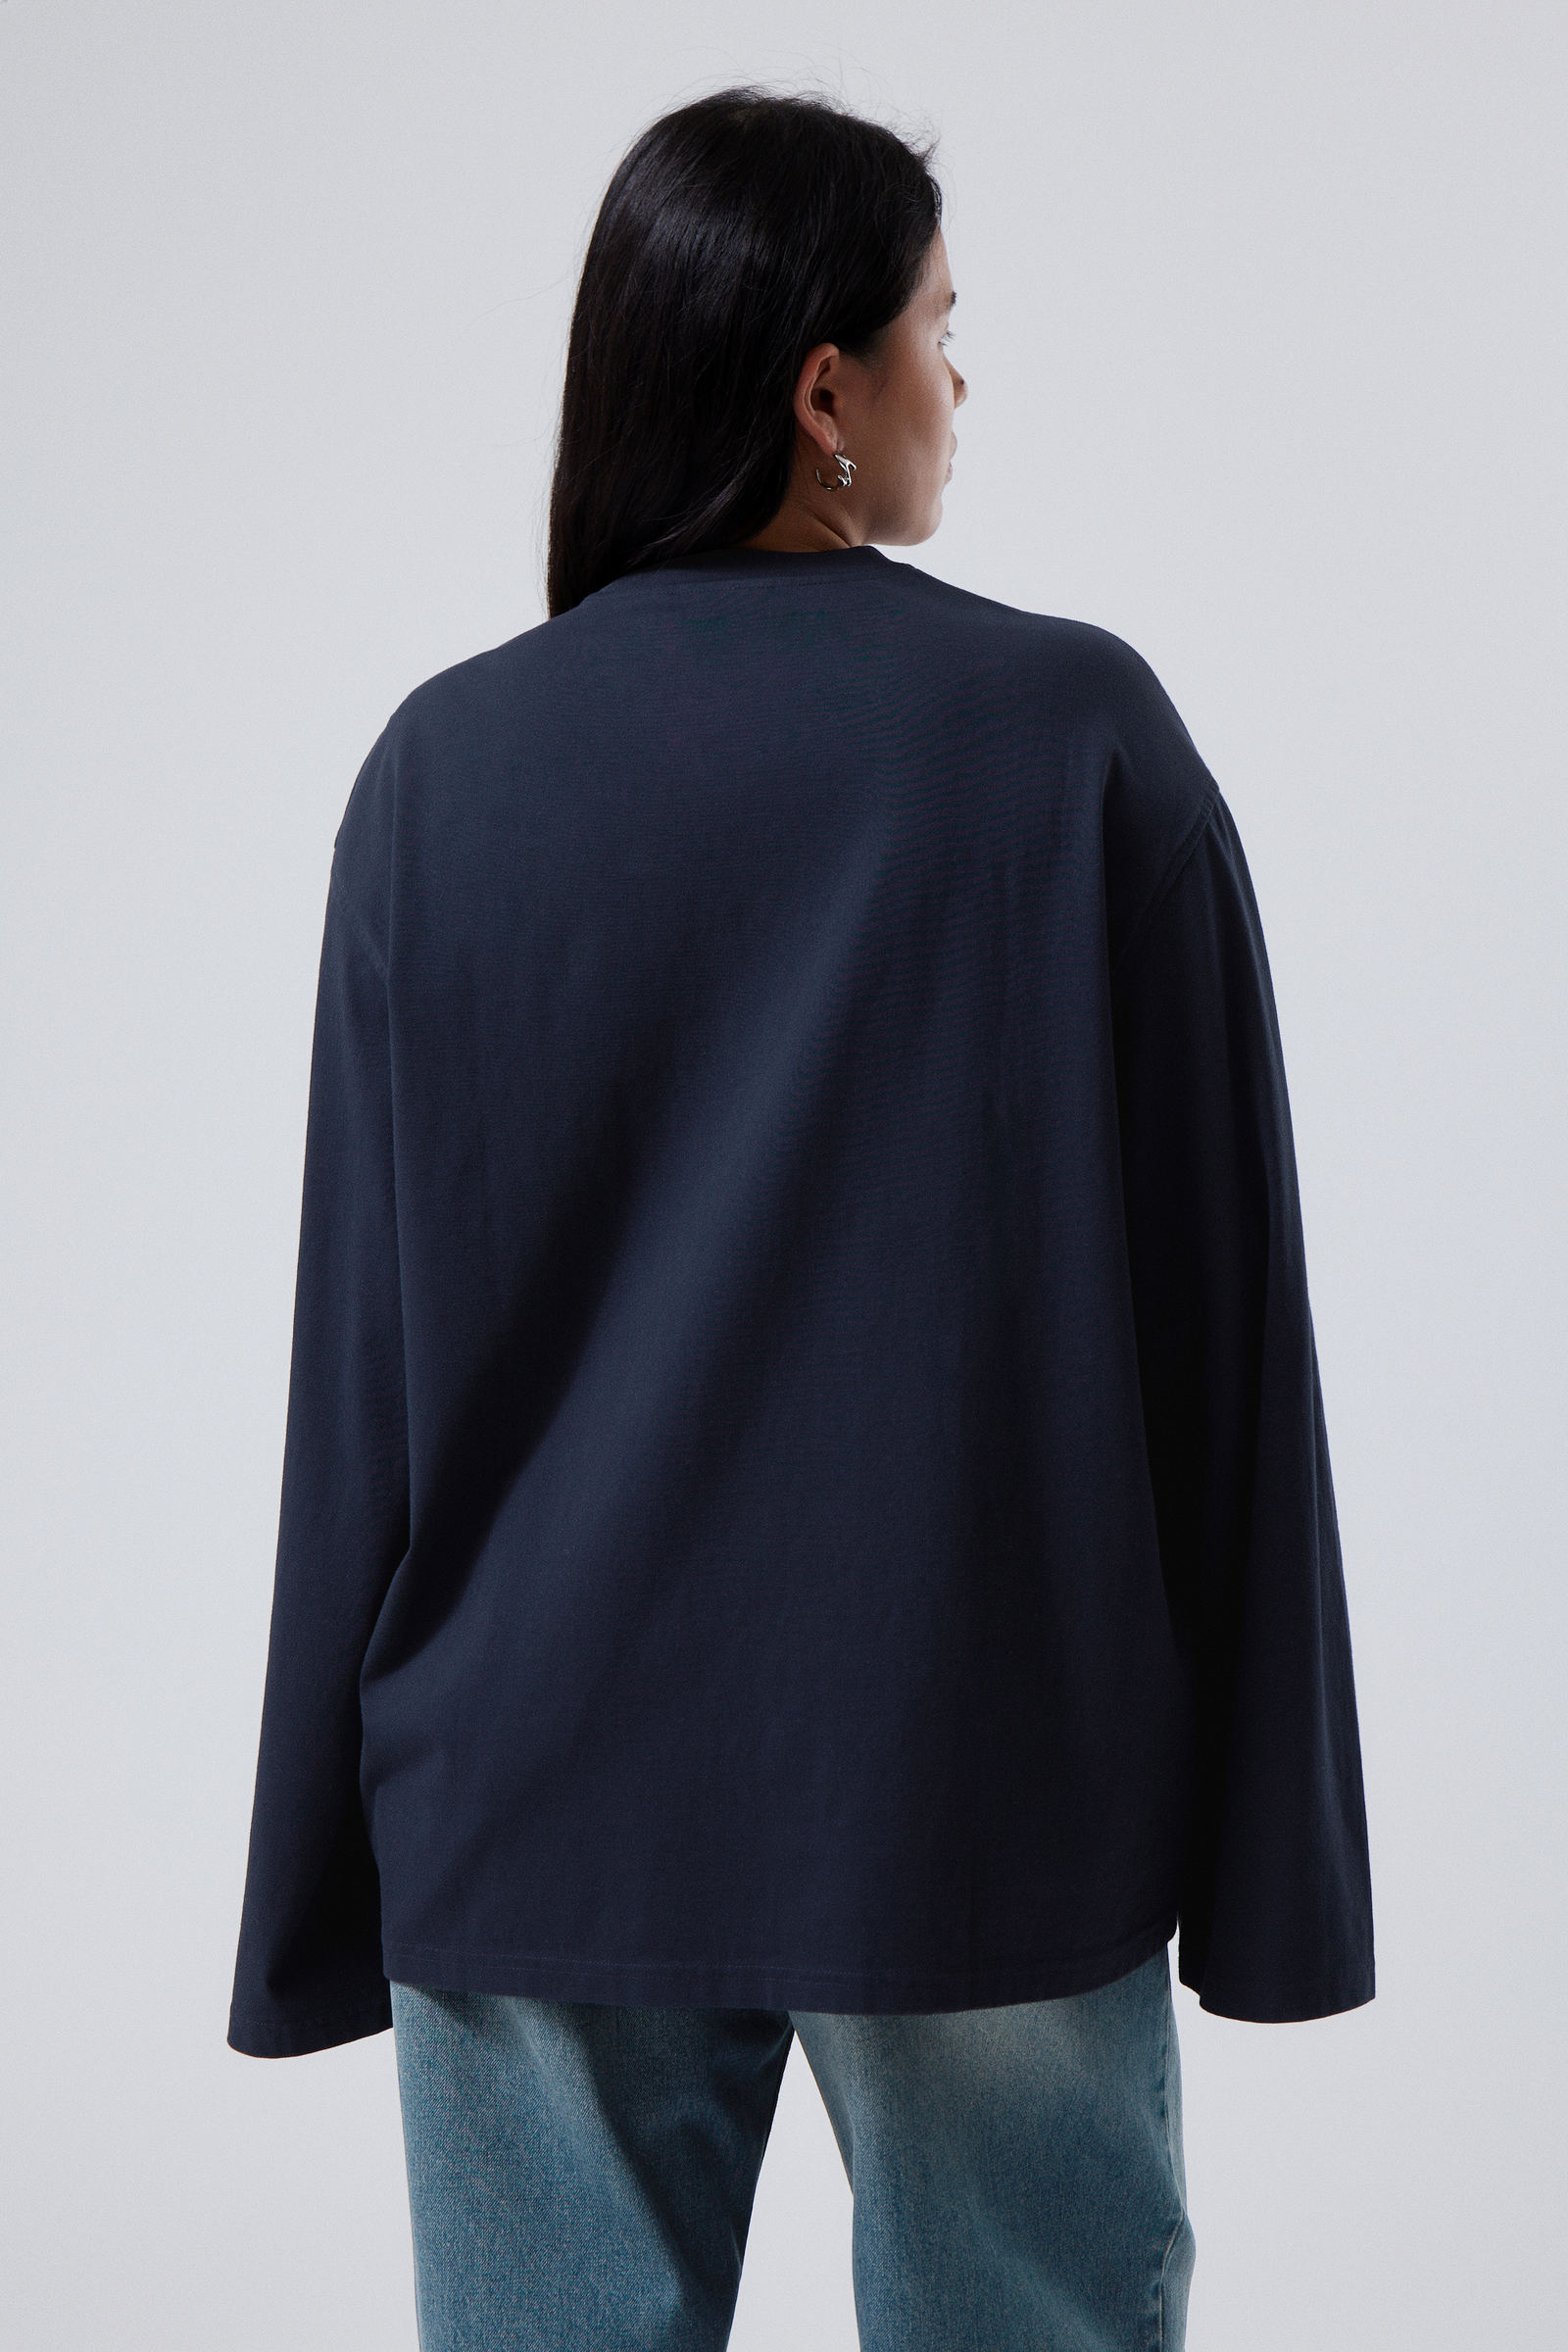 Oversized Long Sleeve Shirt - Navy Blue - Blackskies Online Shop